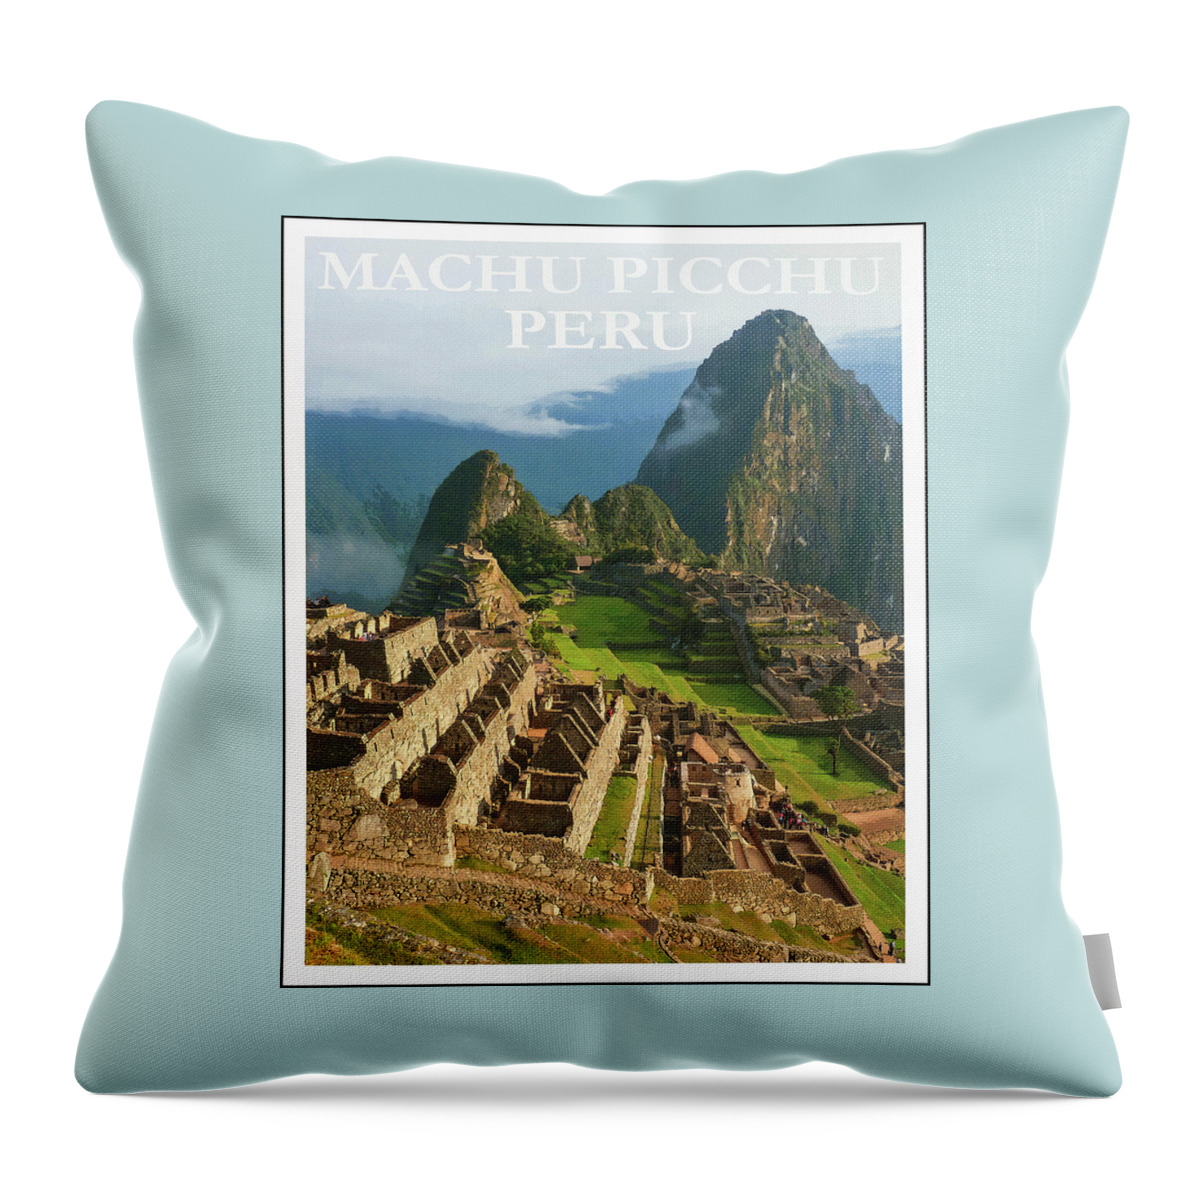 Machu Picchu Throw Pillow featuring the photograph Machu Picchu Peru Retro Vintage Travel Poster by Carol Japp